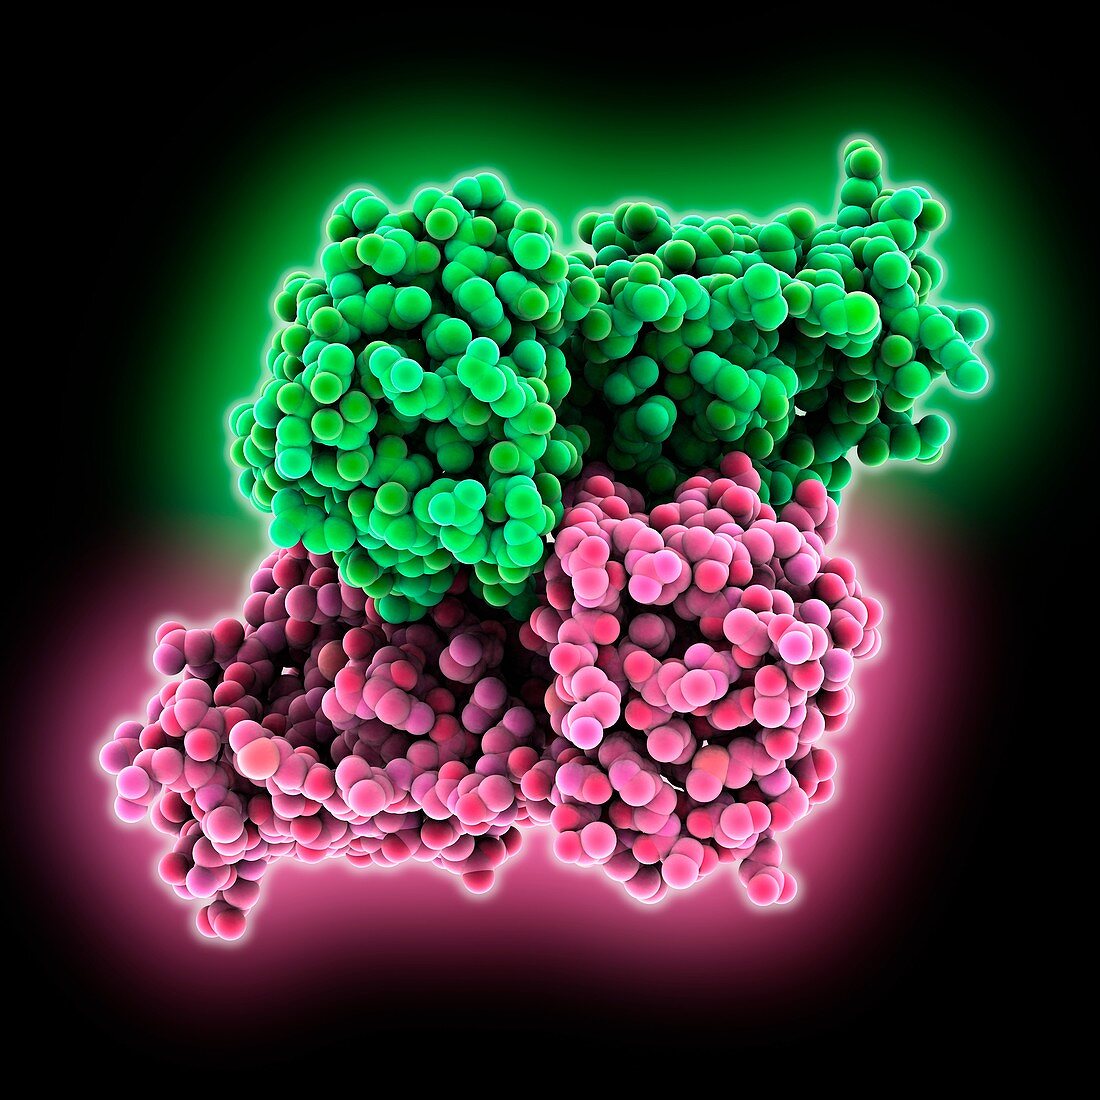 Viral main proteinase molecule